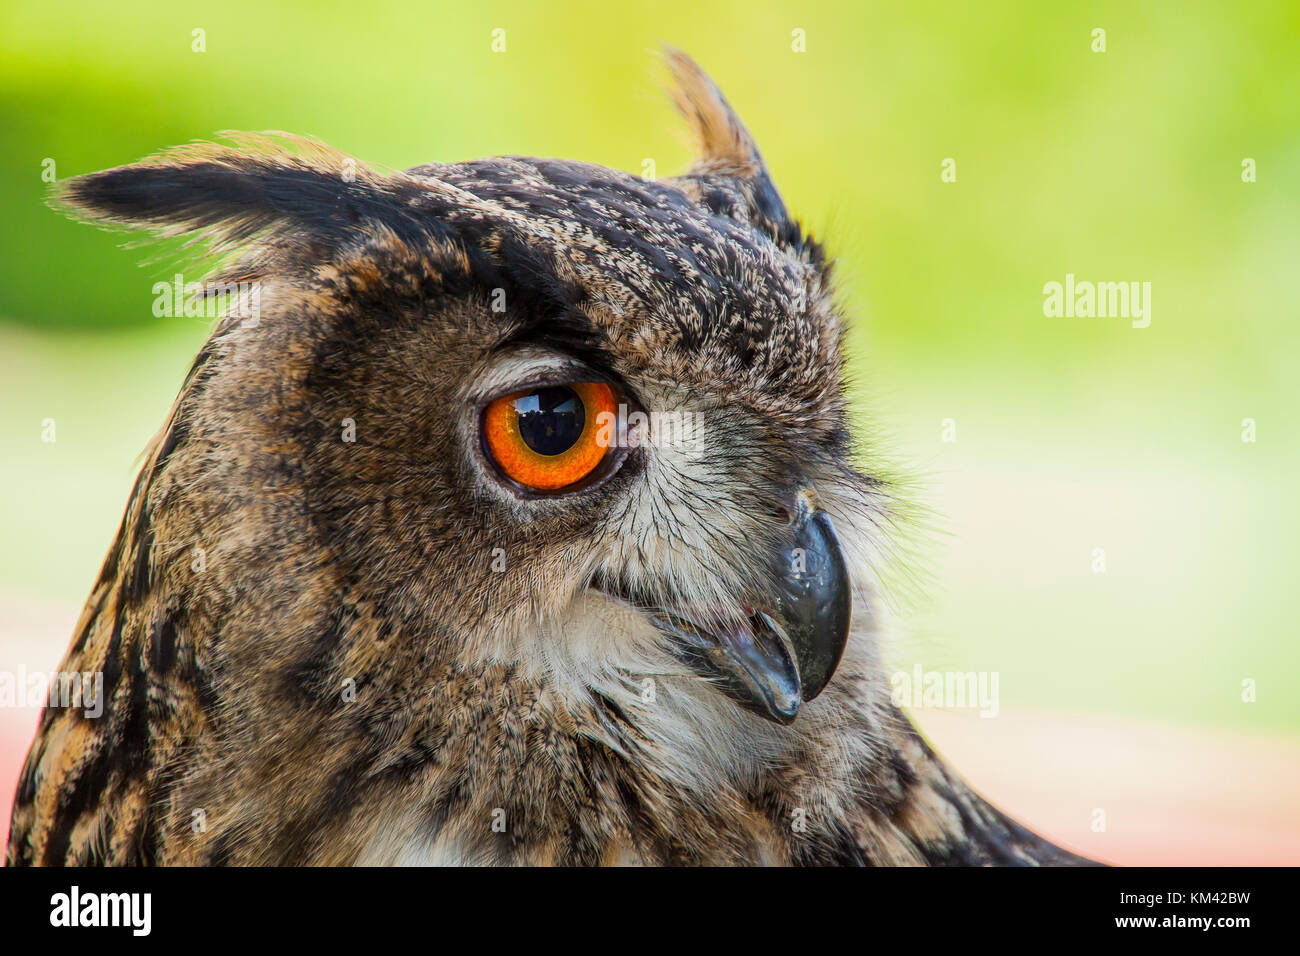 Owl portrait Stock Photo